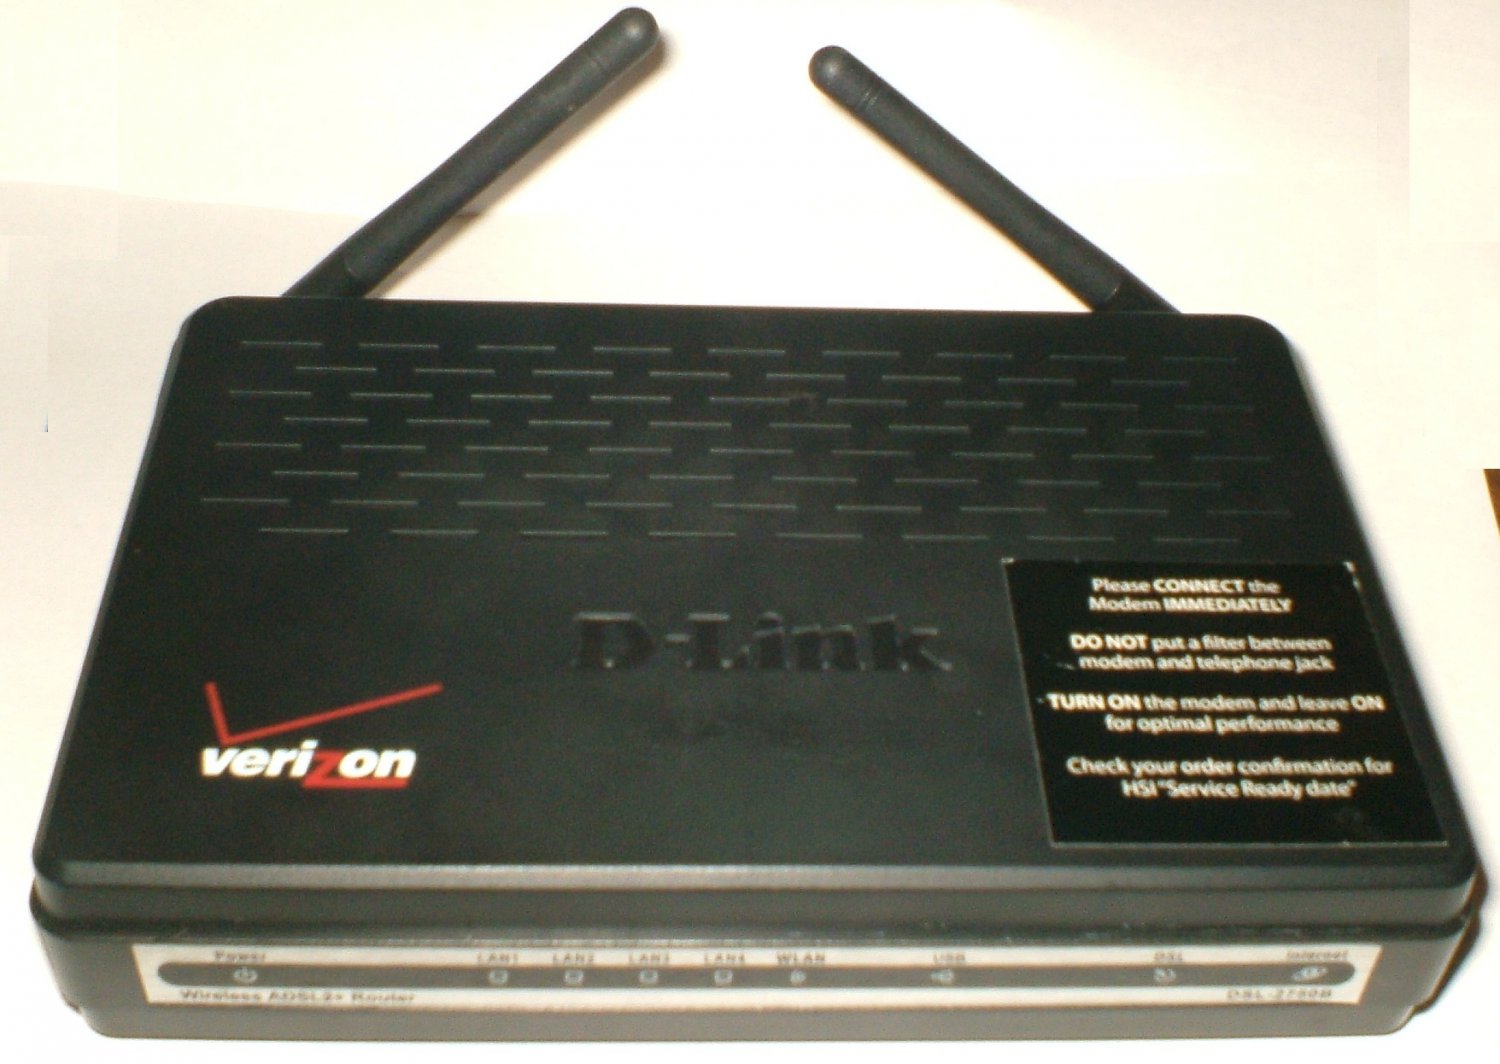 Dlink 2750b wireless non funziona torrent torrent2exe portable carports